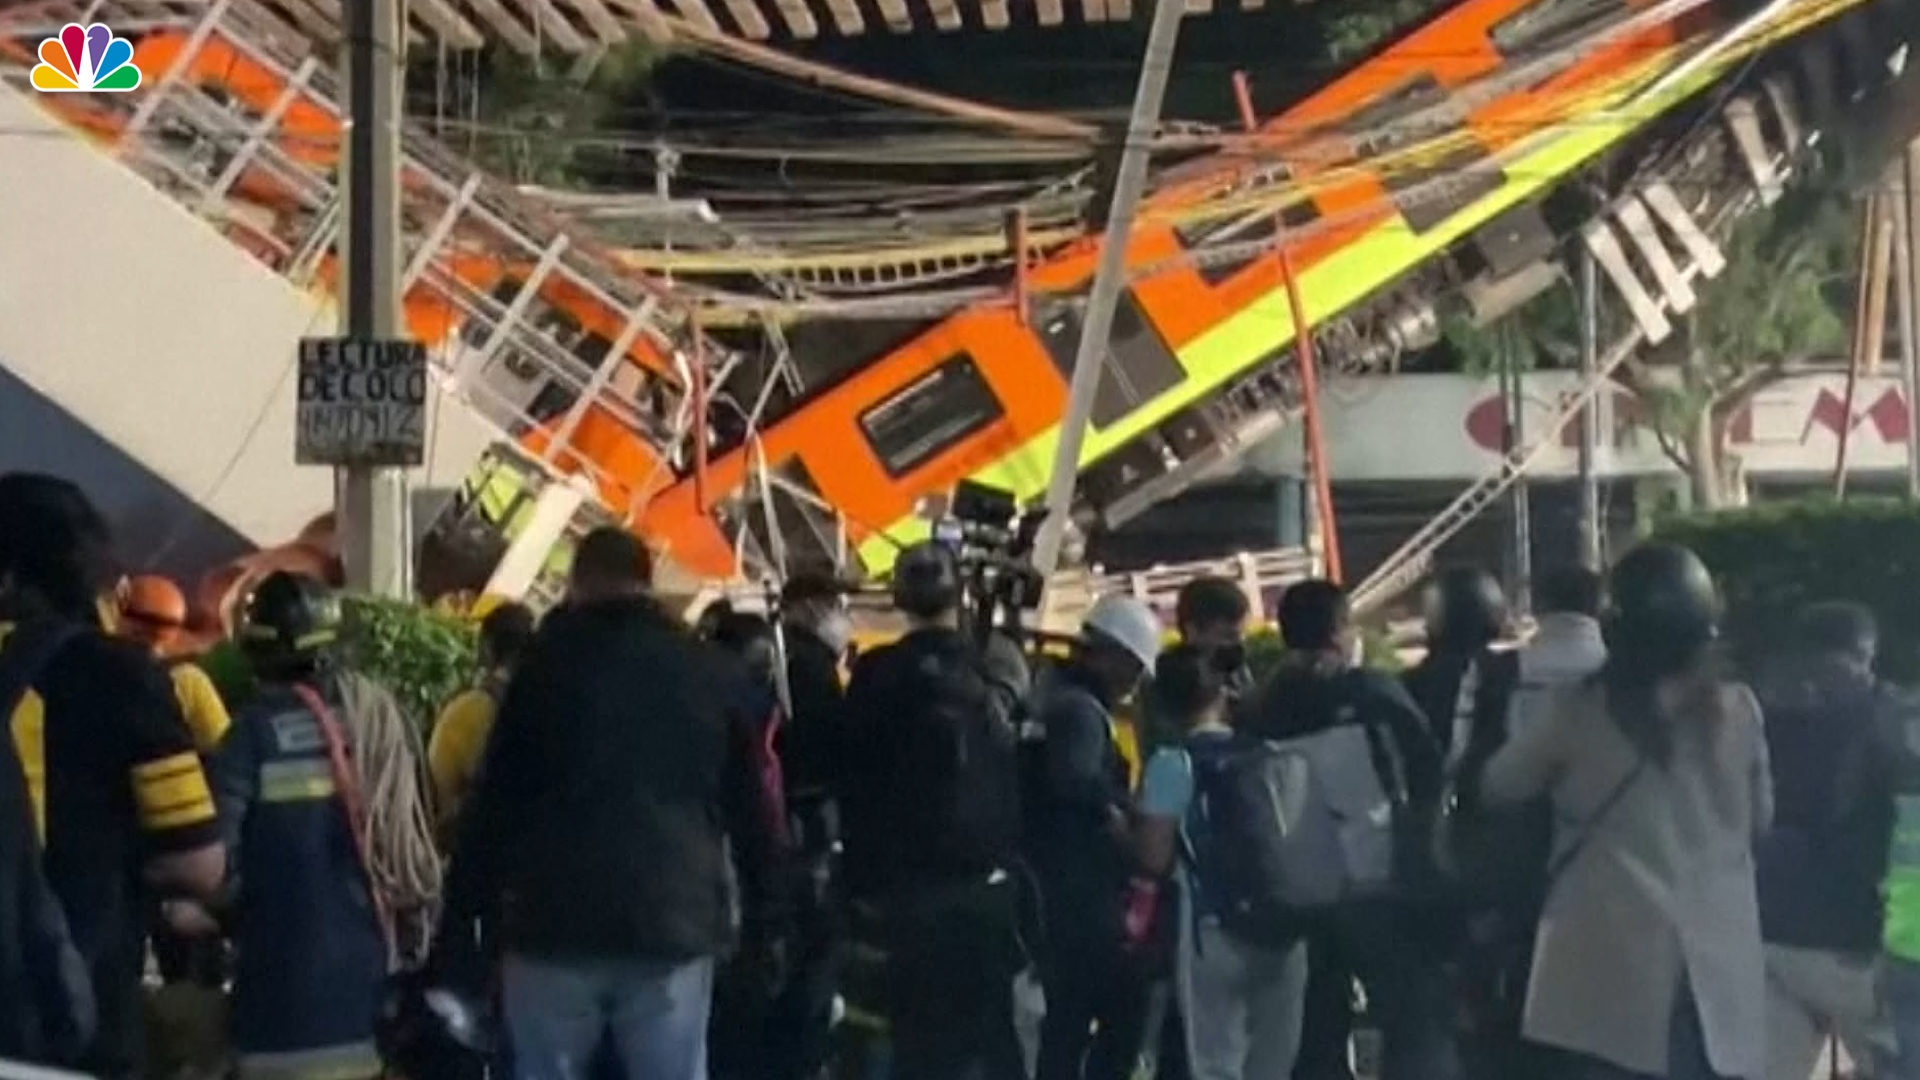 mexico city airport bridge collapse